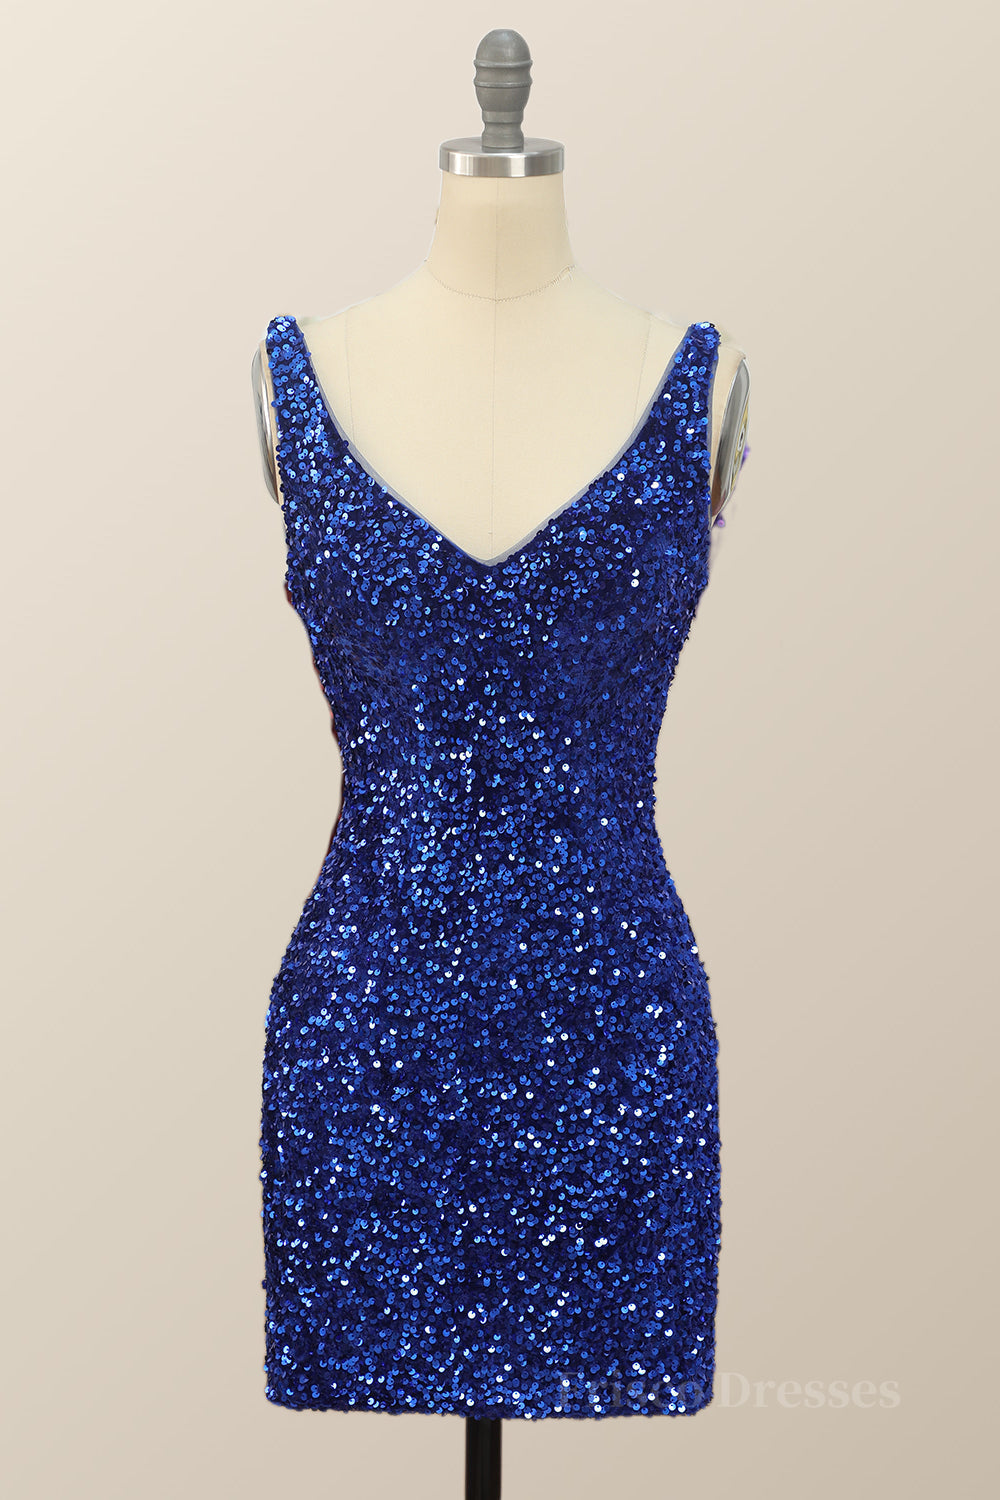 V Neck Royal Blue Sequin Bodycon Mini Dress